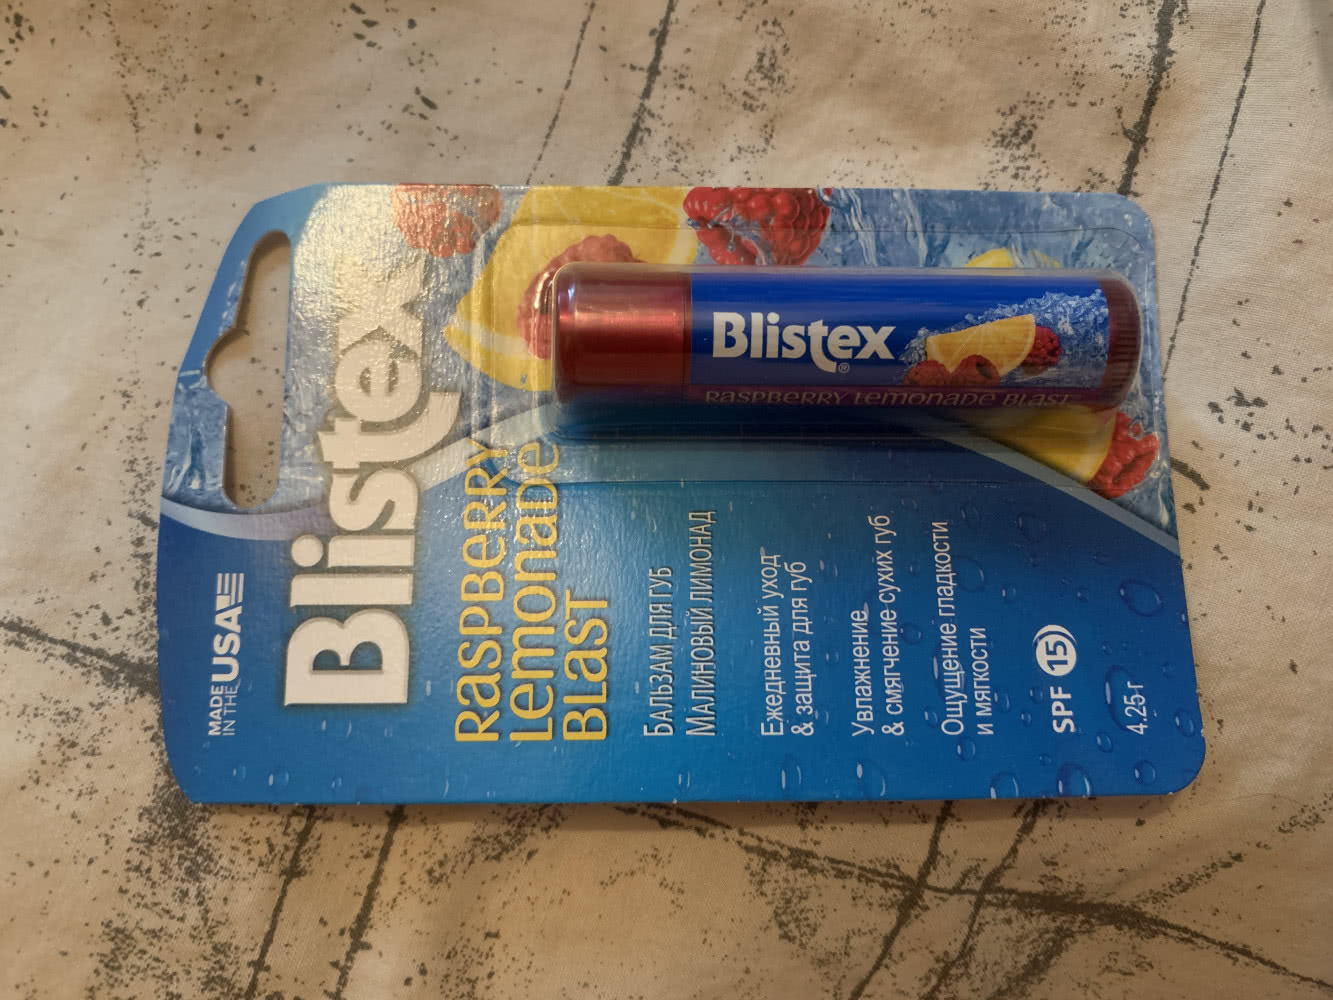 Blistex, Raspberry Lemonade Blast, 4,25г